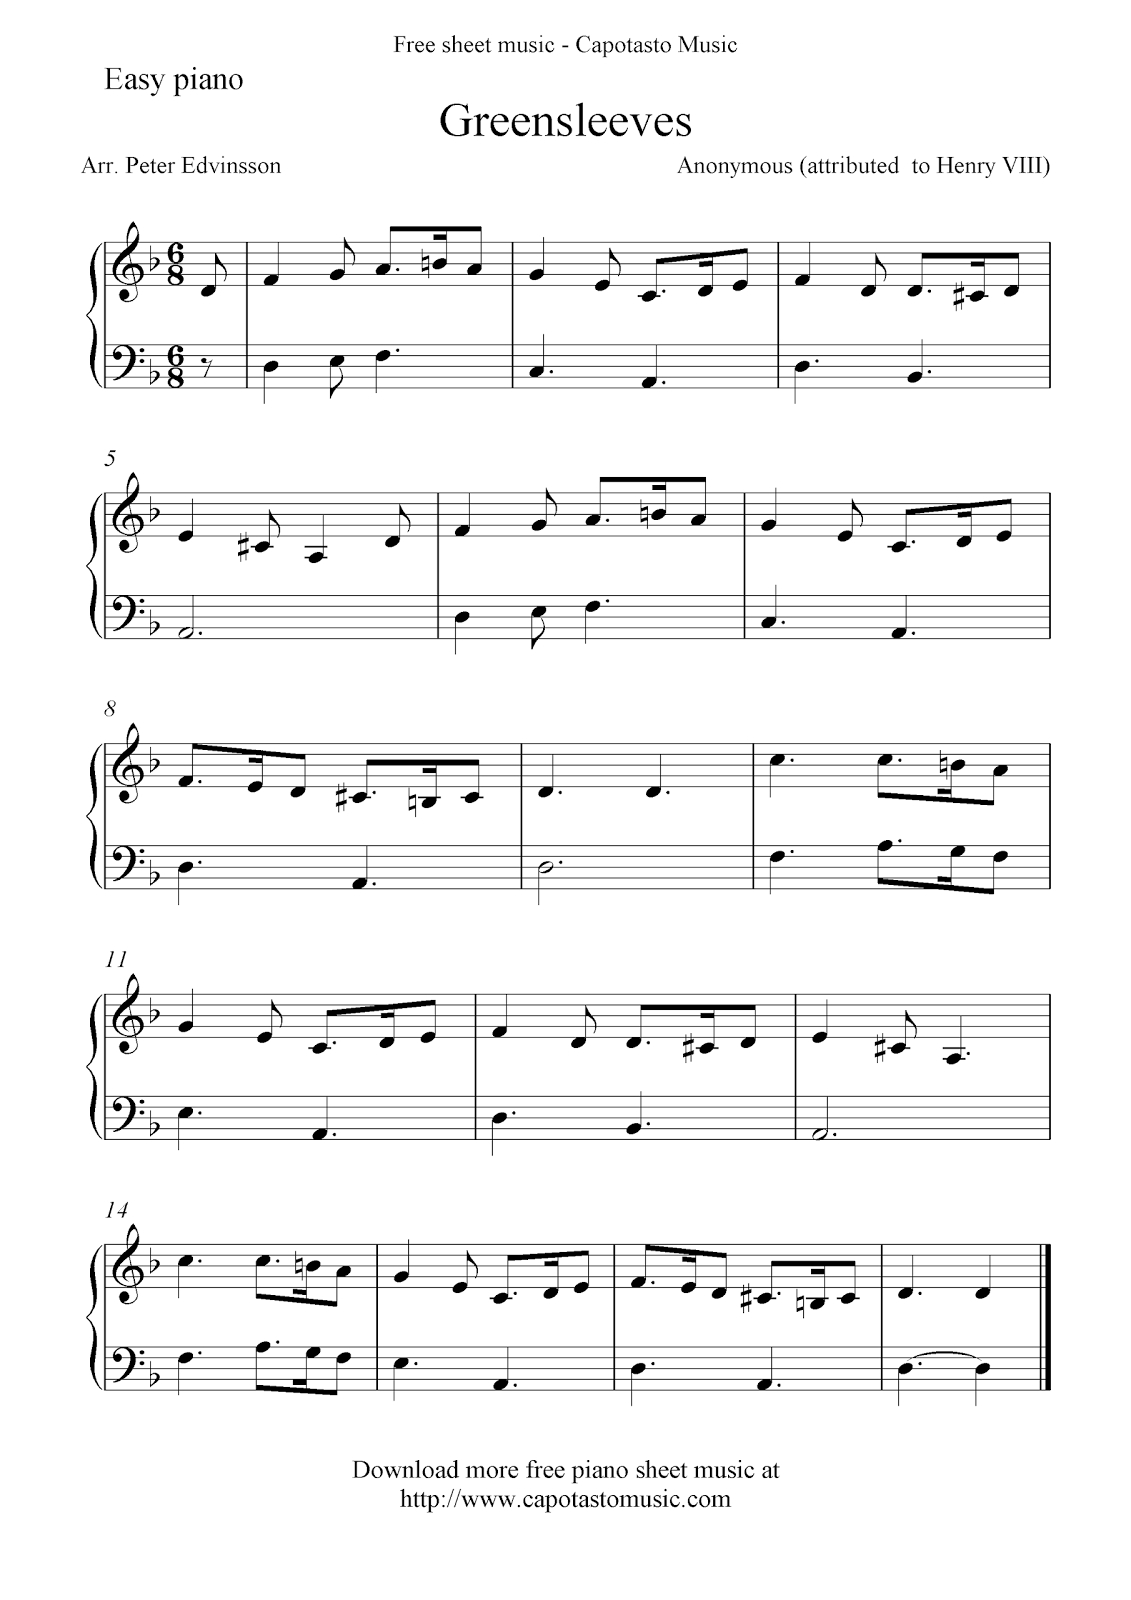 Free Sheet Music Scores: Free #piano Sheet Music Notes, Greensleeves - Free Printable Sheet Music For Piano